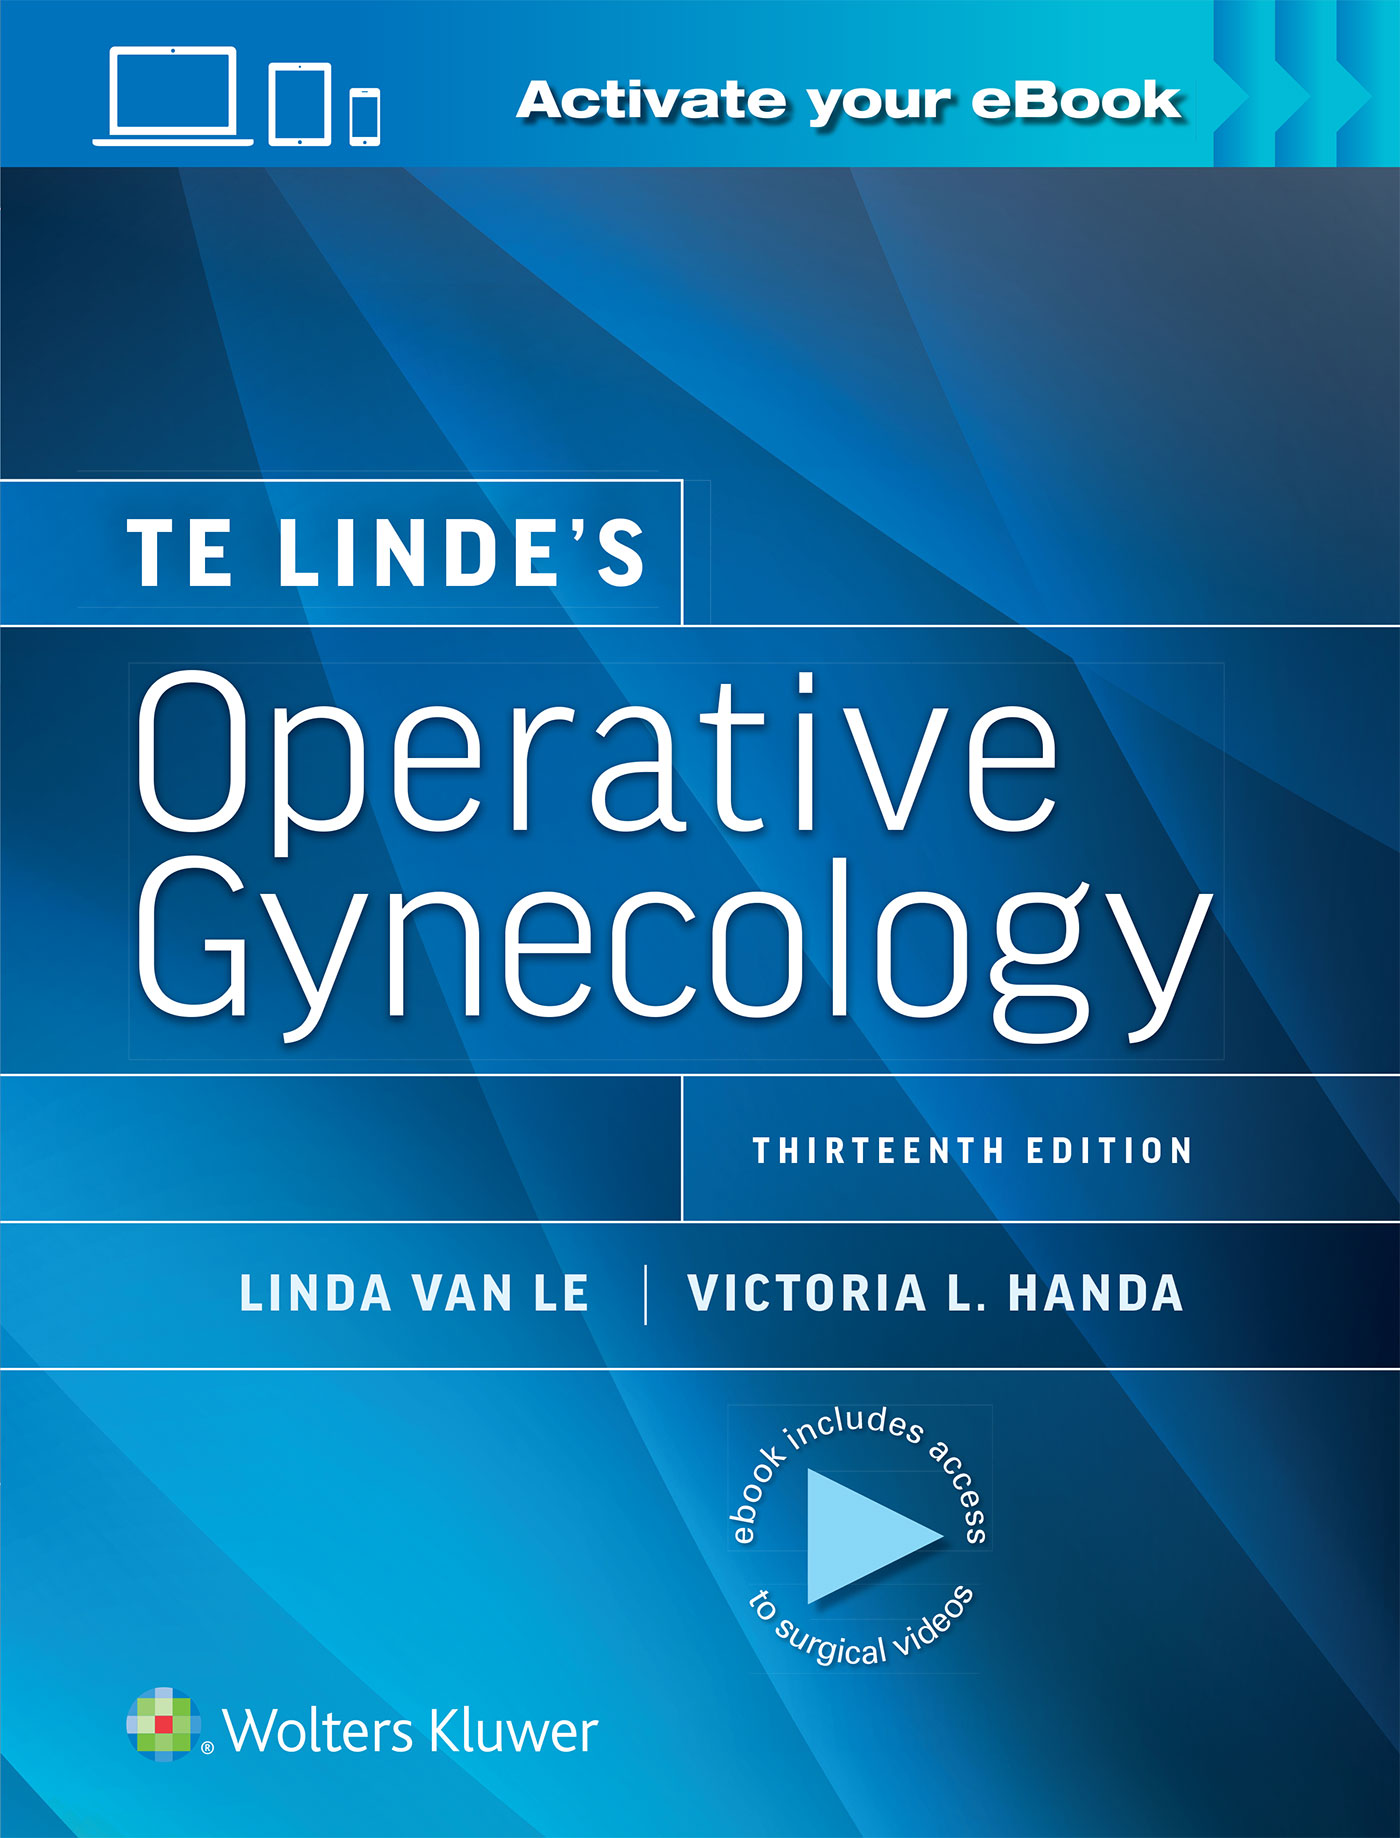 Te Linde's Operative Gynecology, 13th ed.